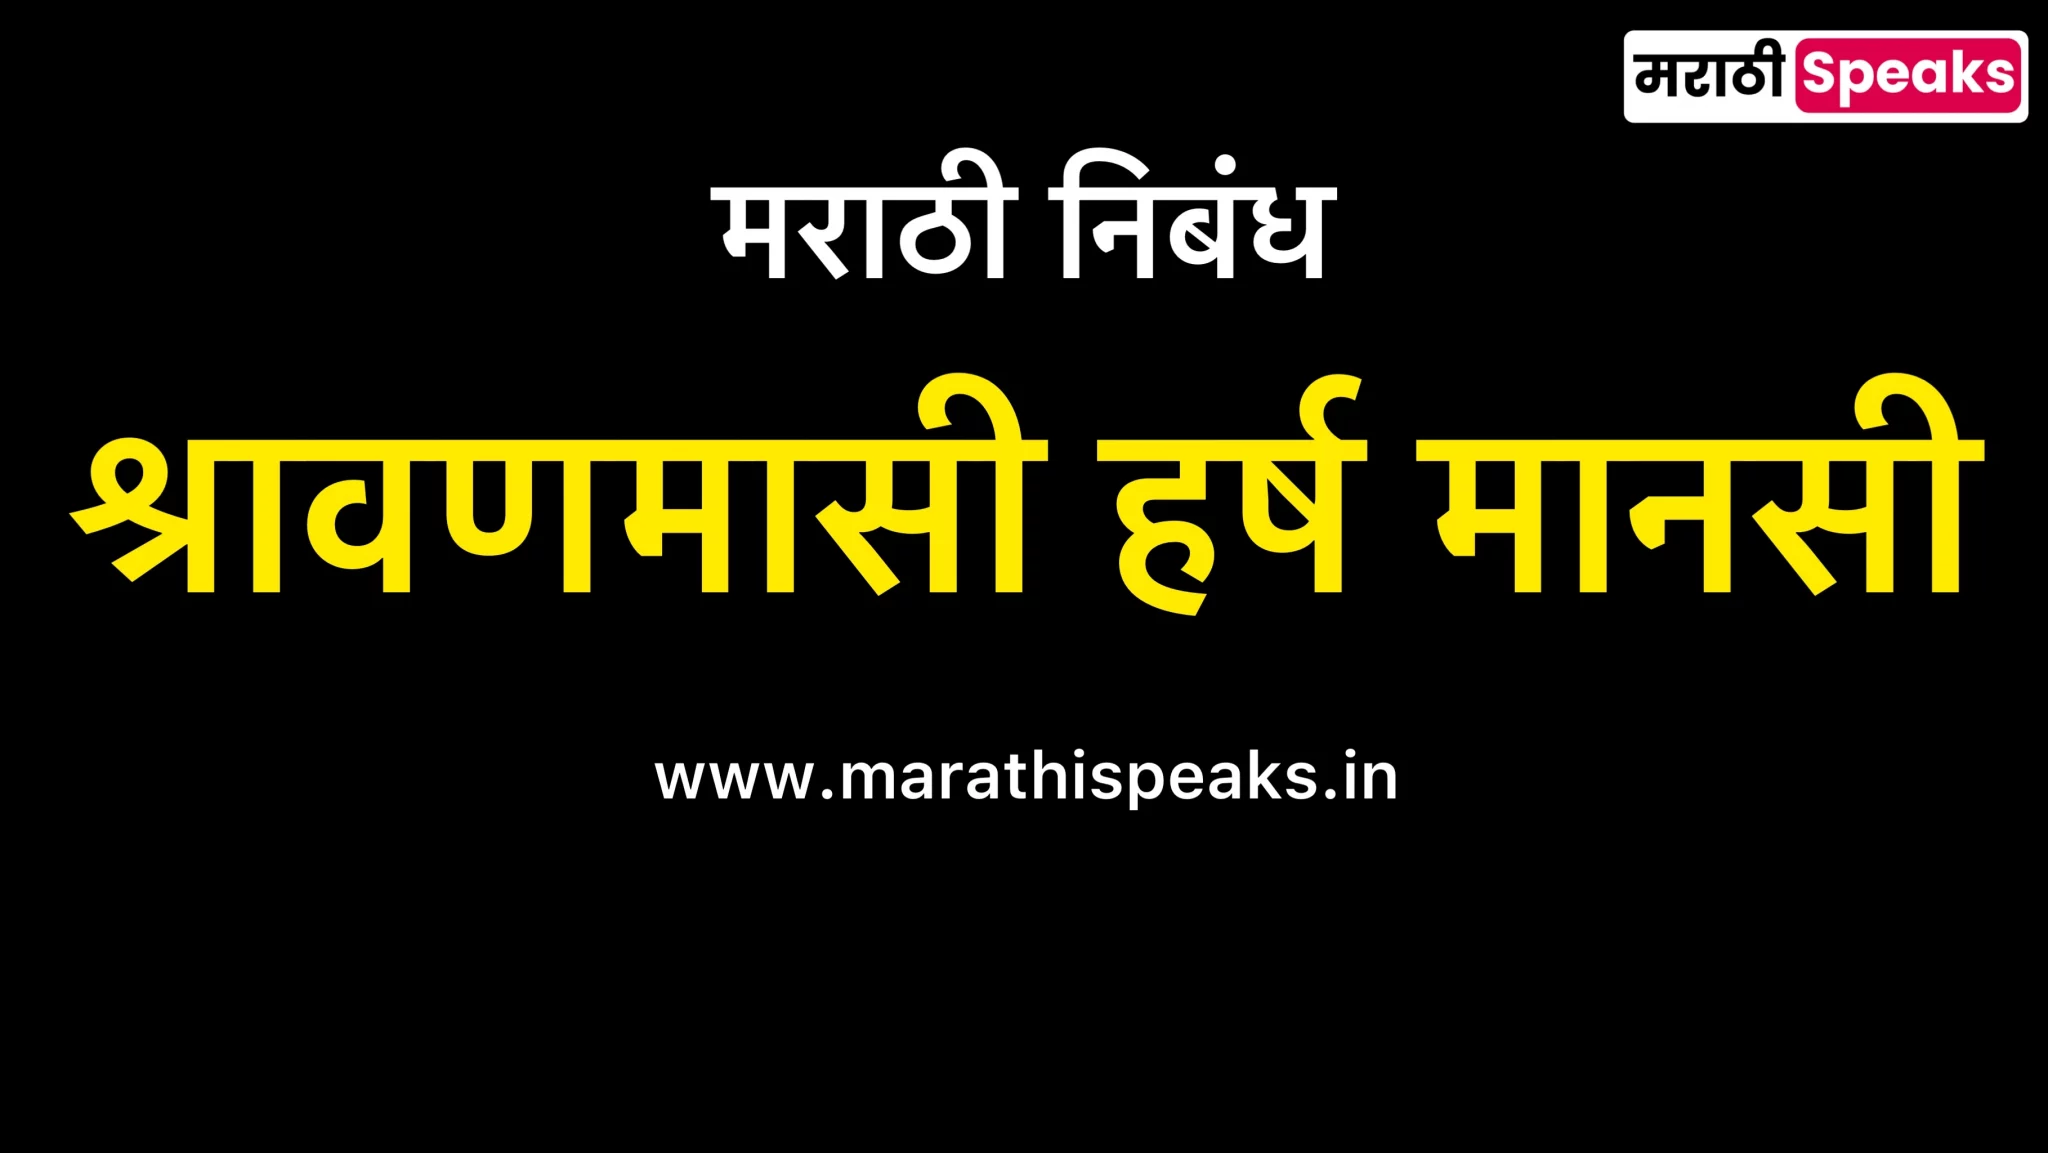 Sharavanmasi Harsh Mansi Essay In Marathi